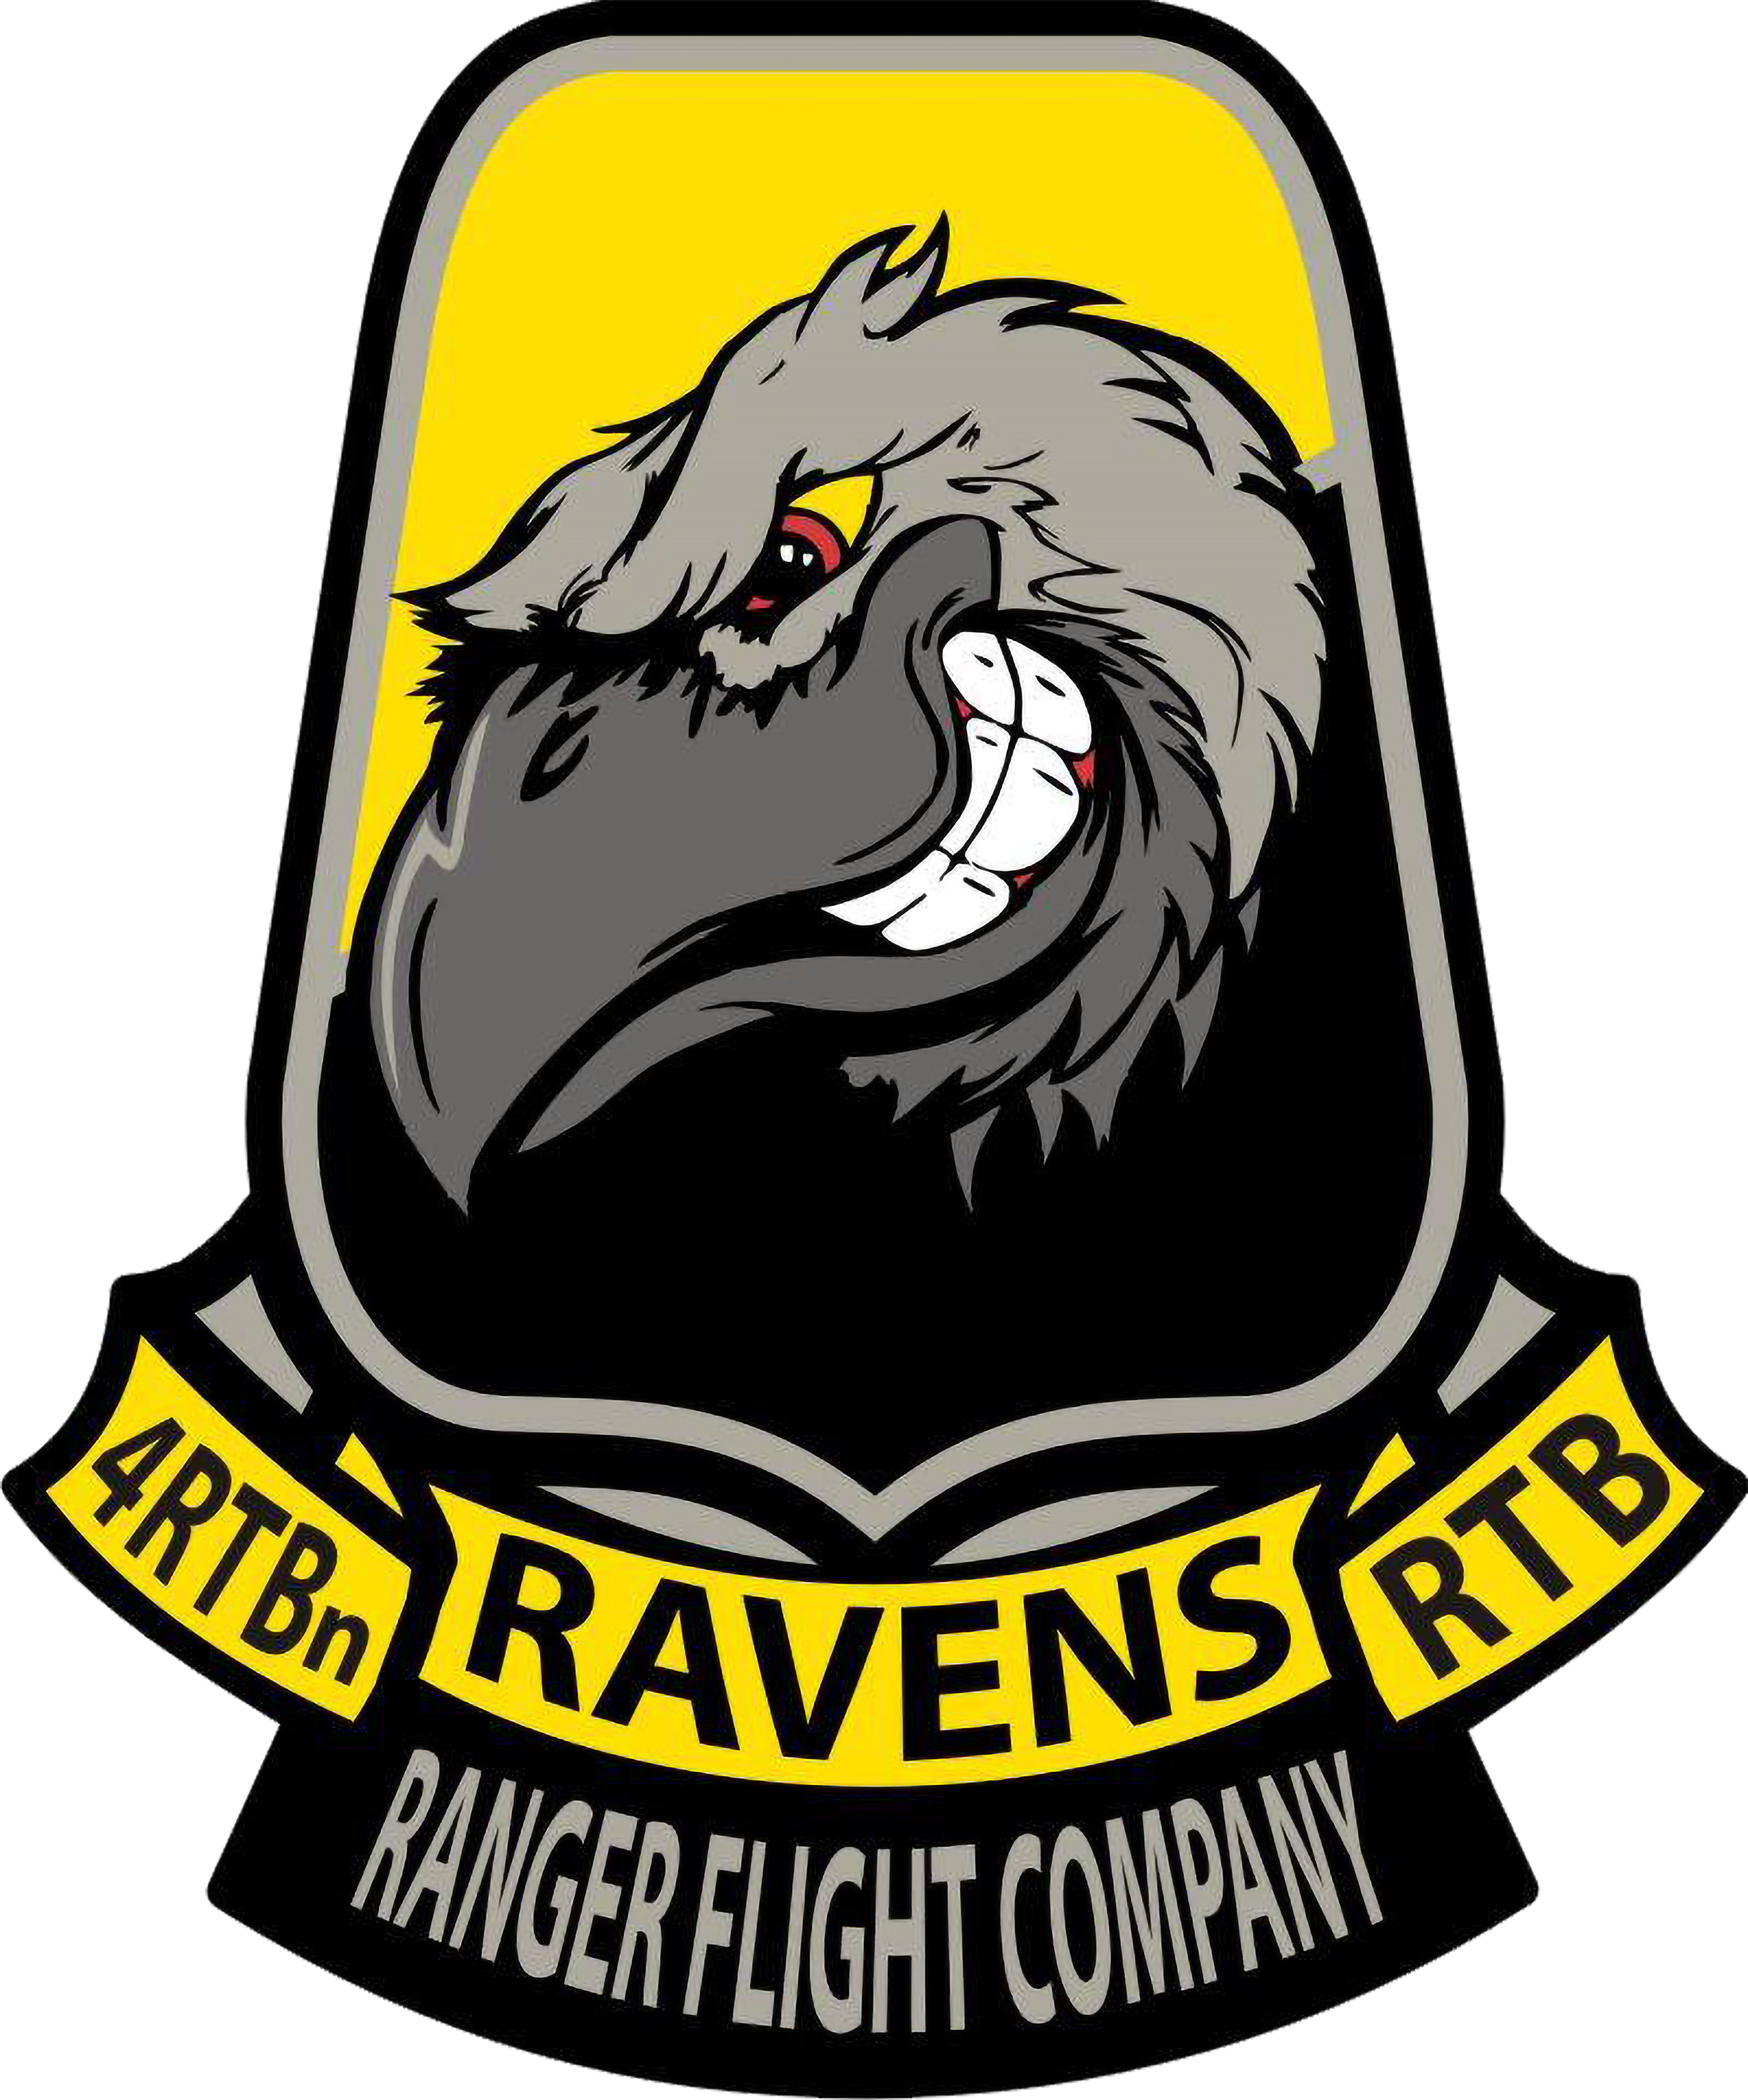 4th RTB, Ranger Flight Company "Ravens"